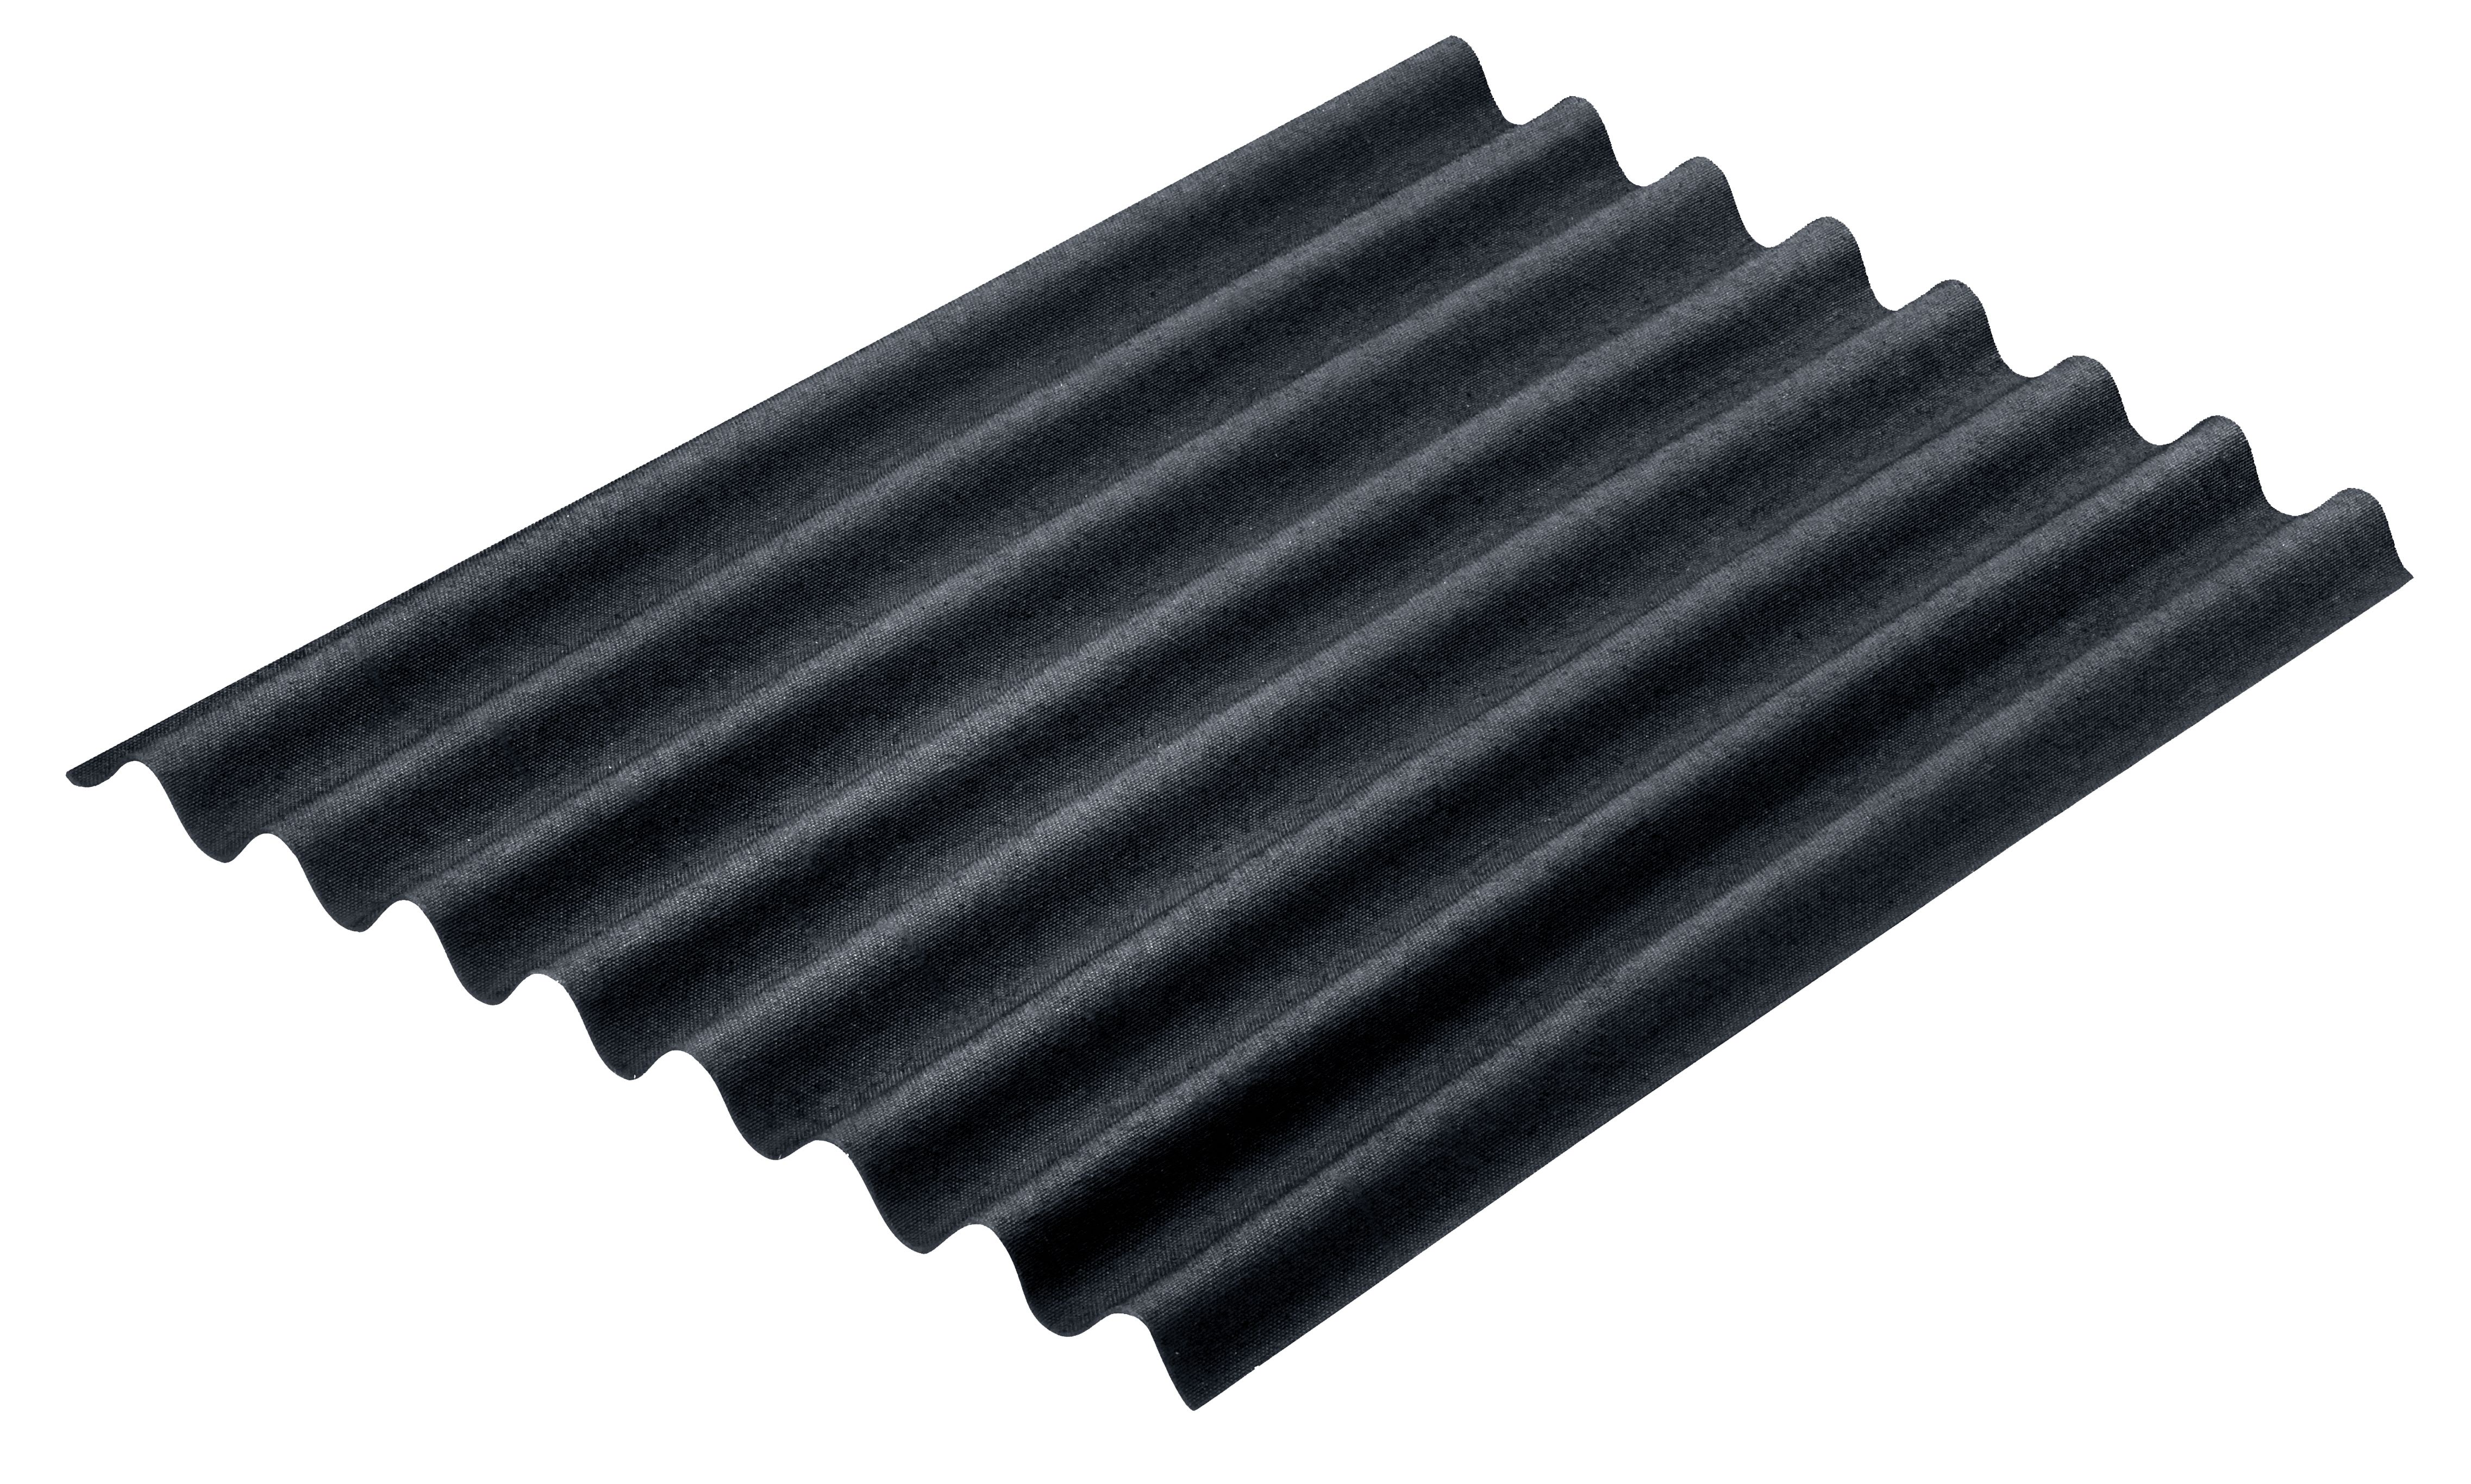 Onduline Easyline Intense Black Bitumen Corrugated Roof Sheet